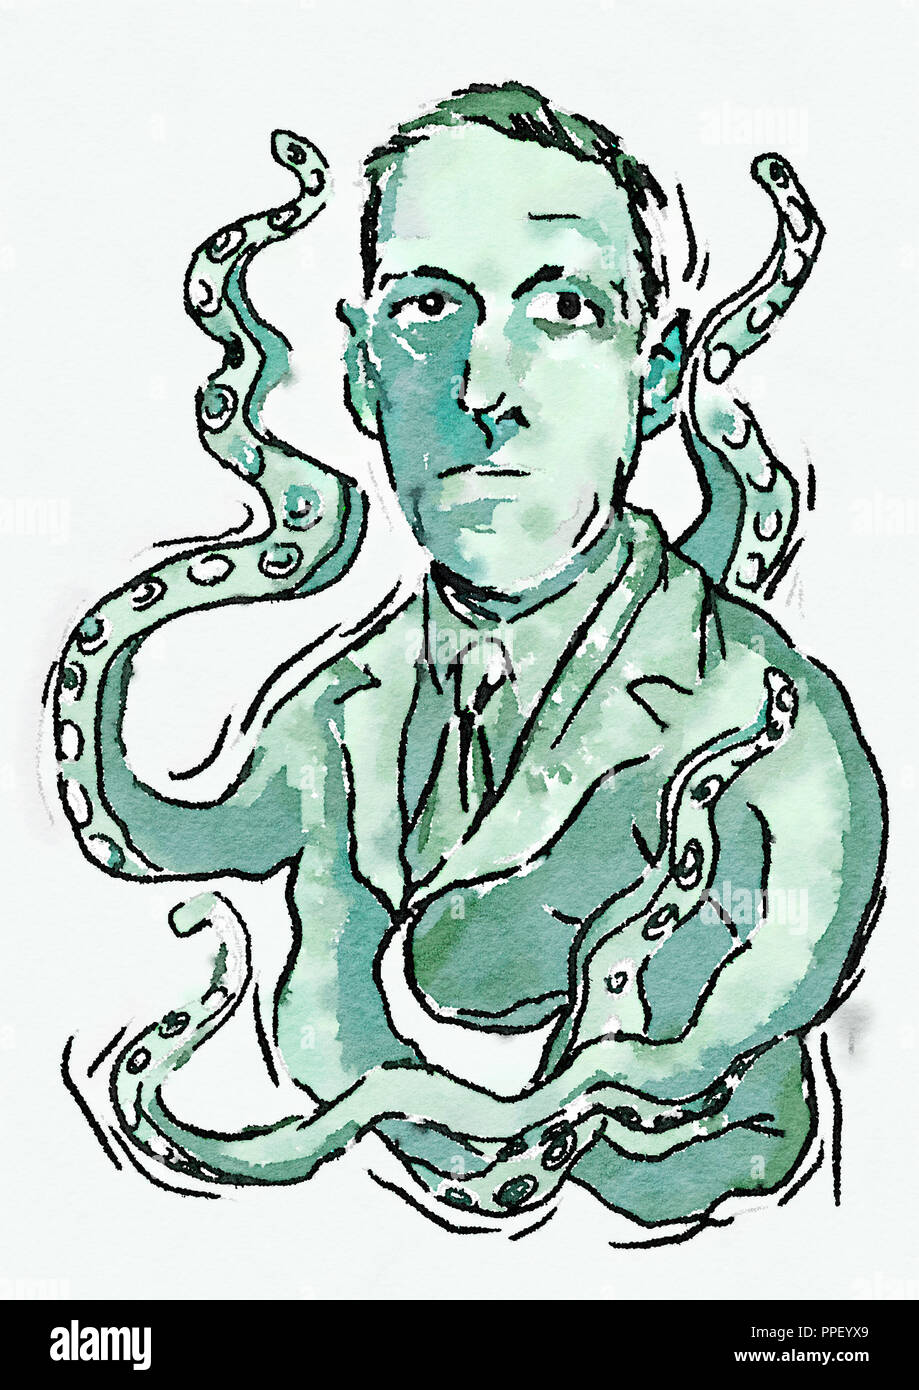 H.P. Lovecraft illustration Stock Photo